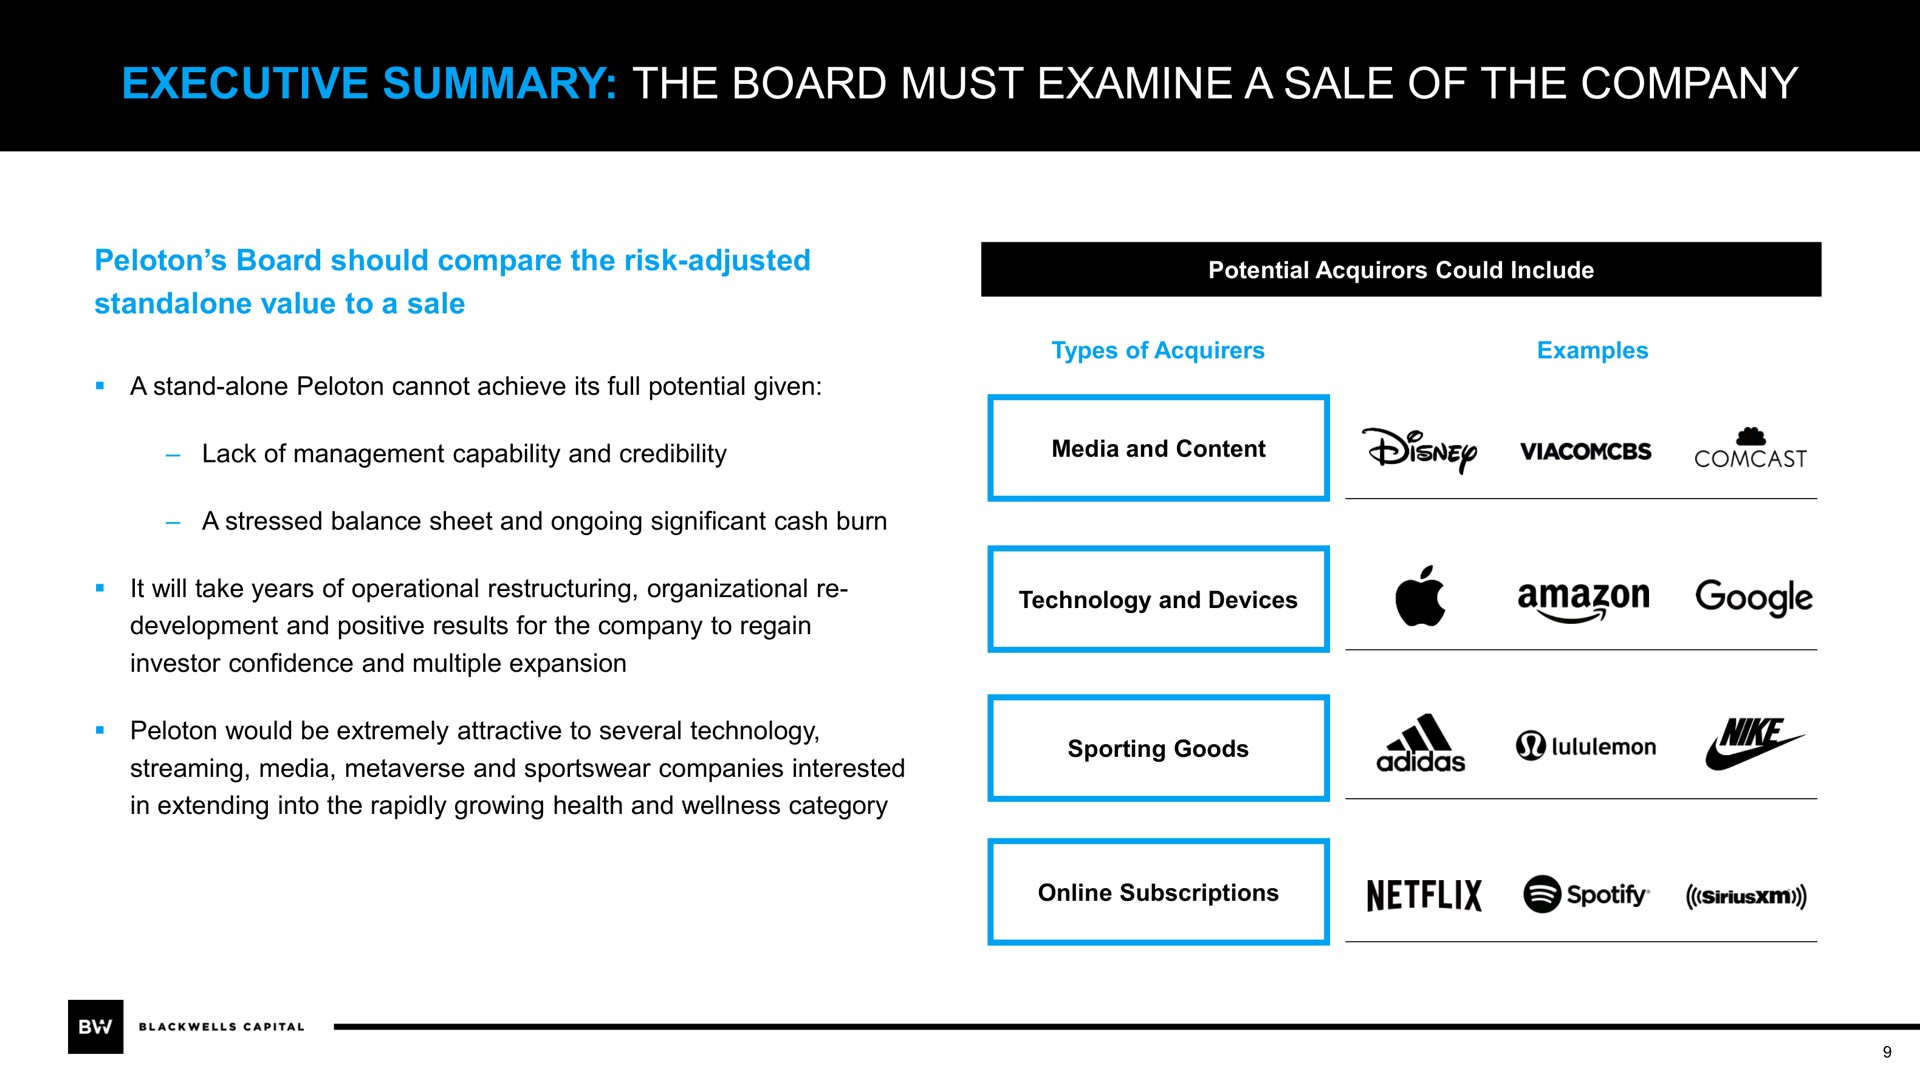 executive summary the board must examine a sale of the company | Blackwells Capital